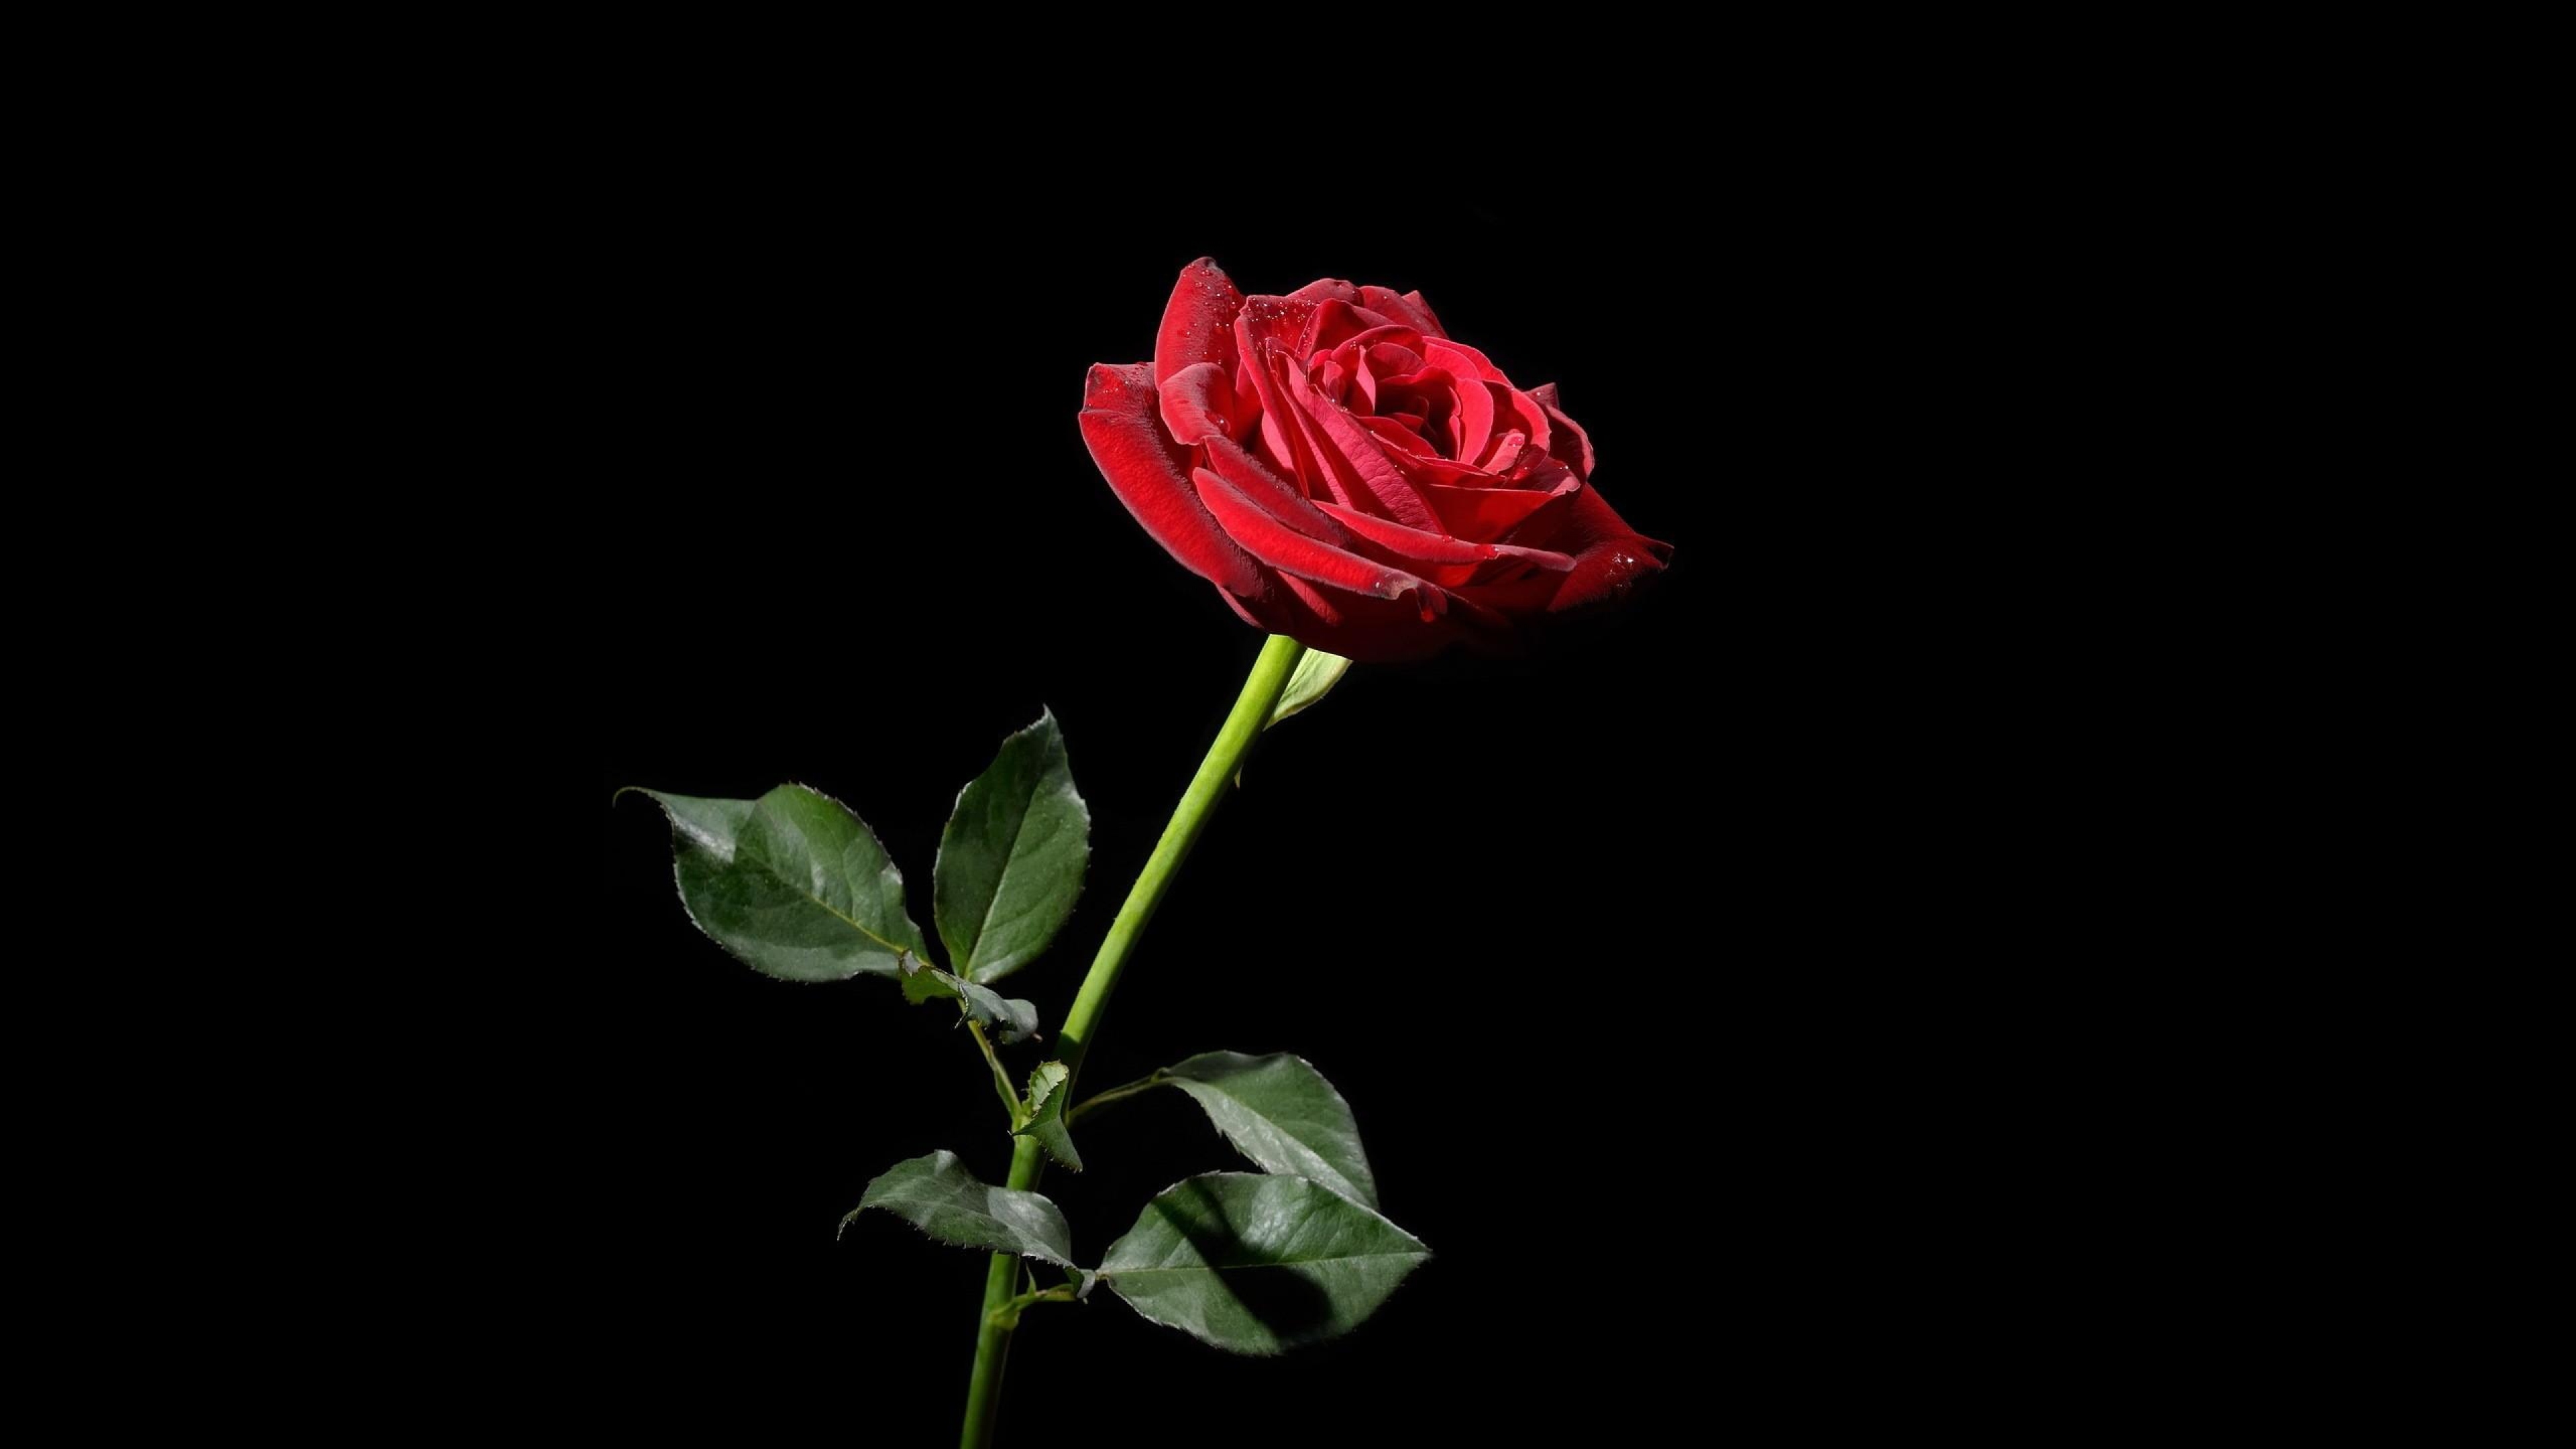 🔥 Download Rose Red Flower Black Background Wallpaper 4k Ultra HD by